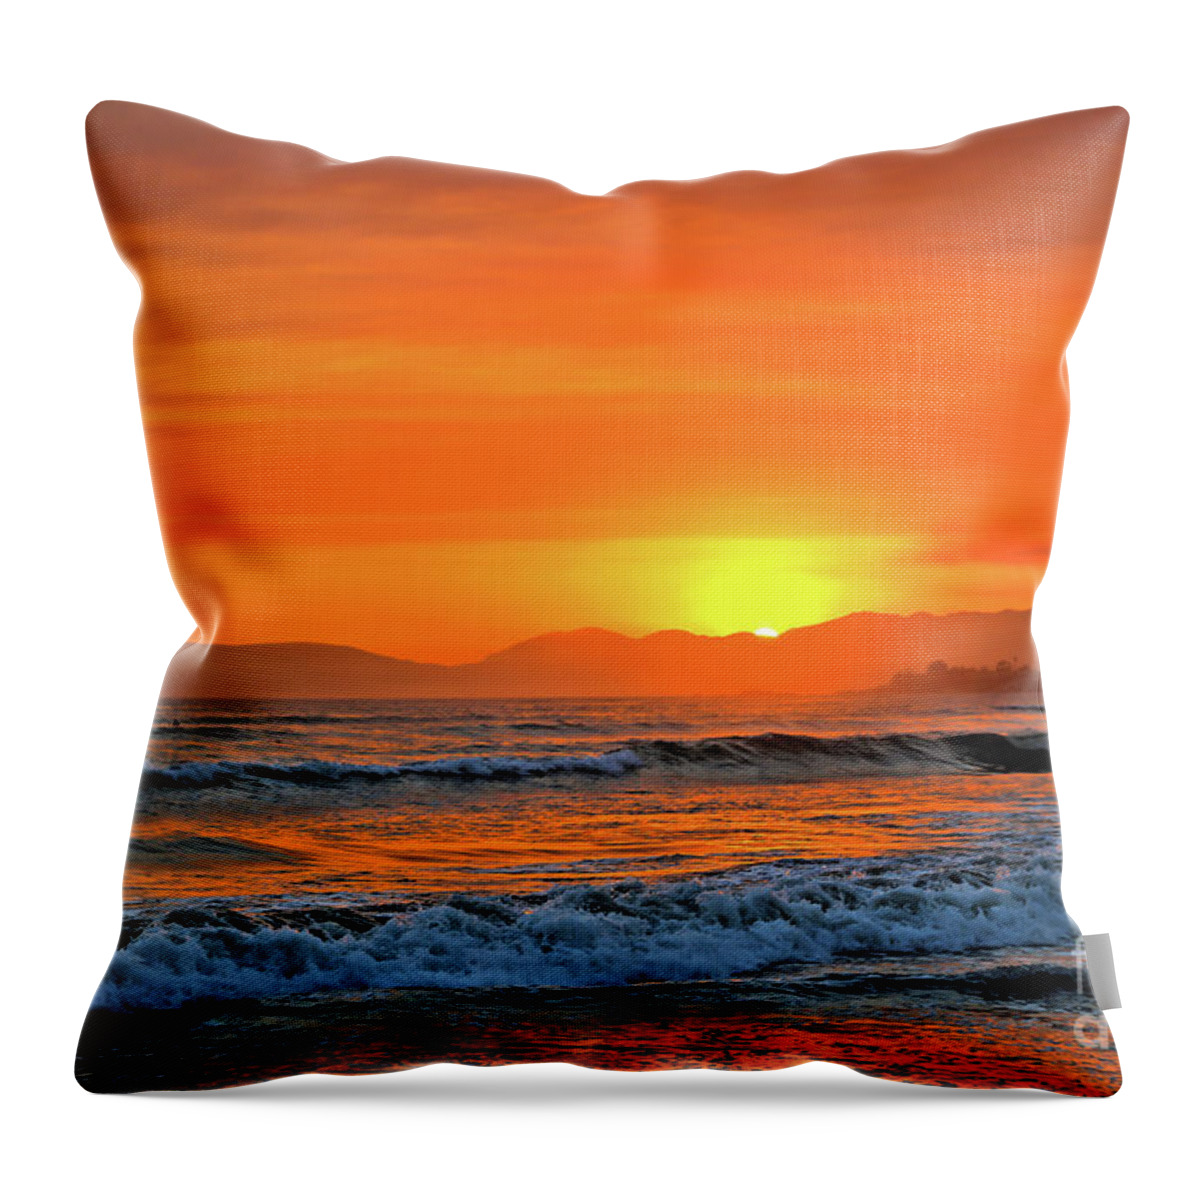 Sunset Throw Pillow featuring the photograph Orange Sunset by Vivian Krug Cotton